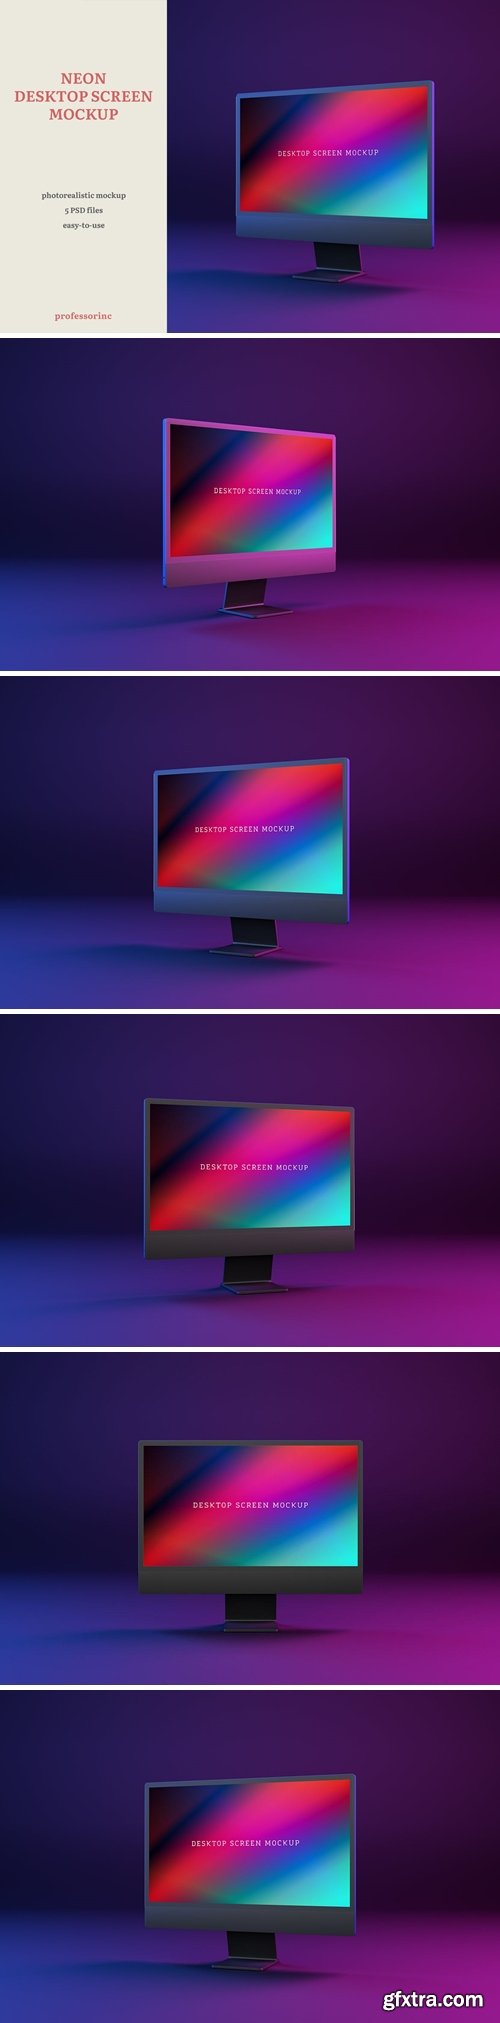 Neon Desktop Screen Mockup